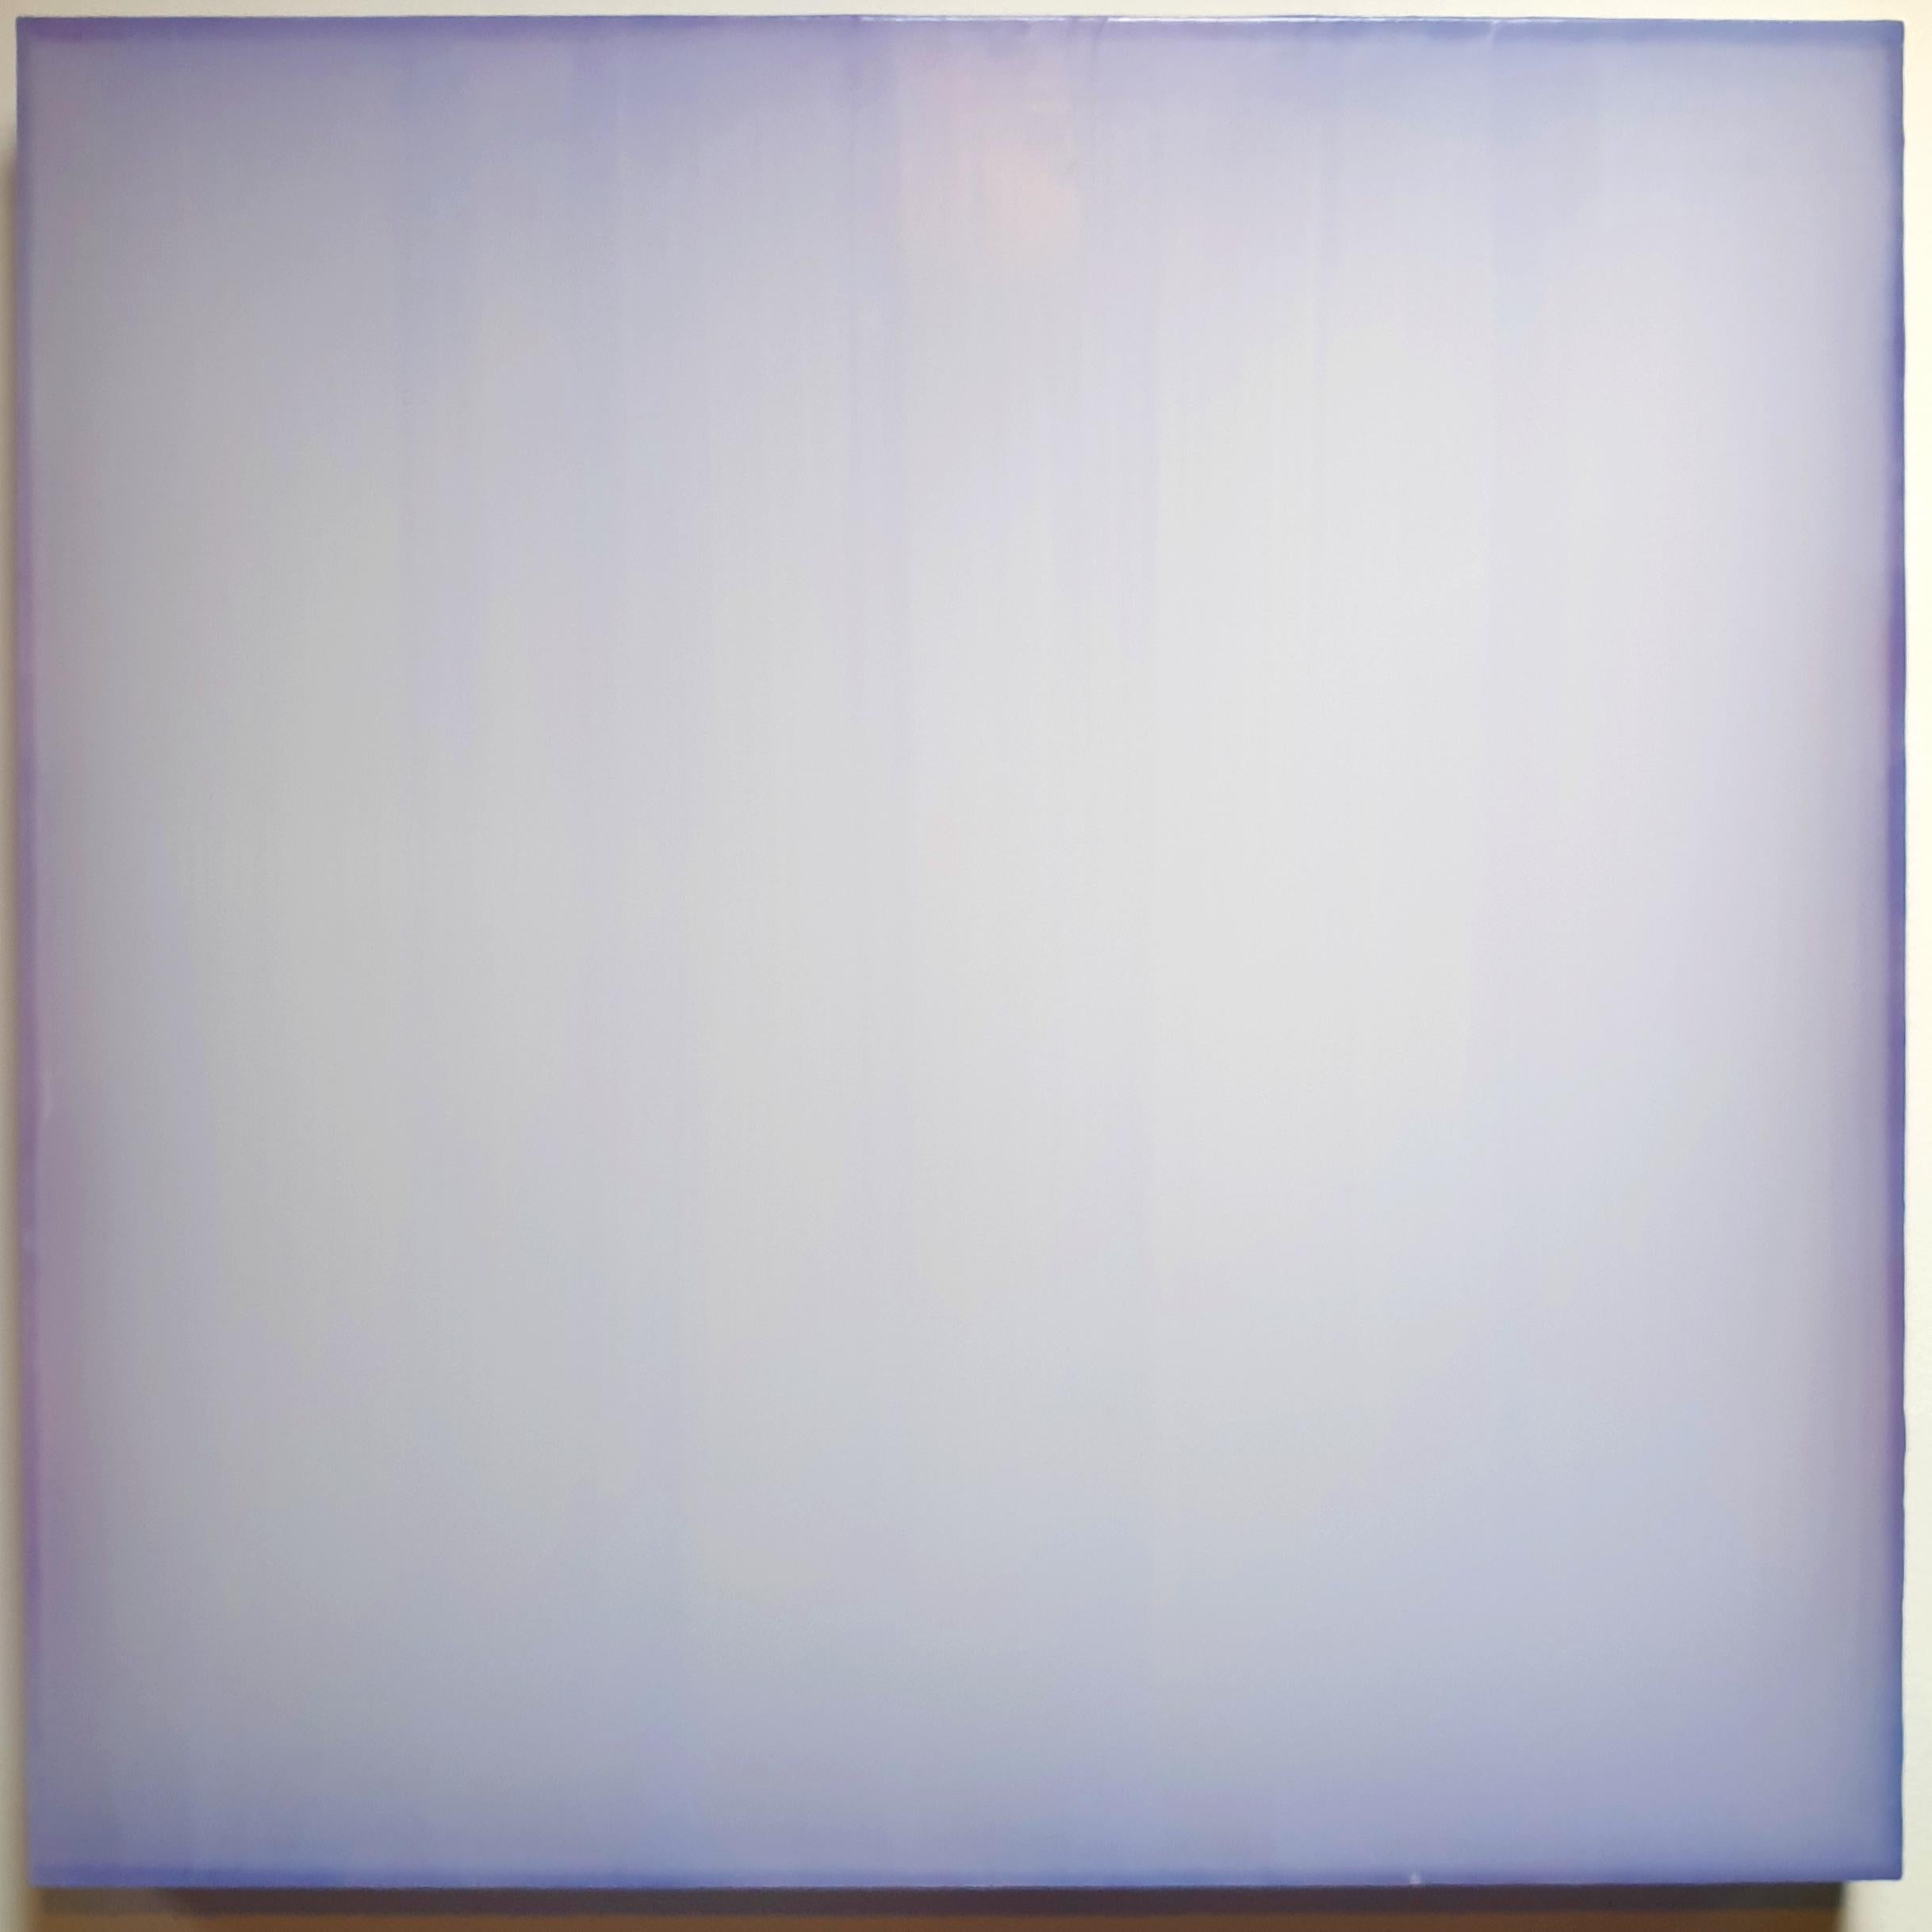 Coronachrome hellviolett - contemporary modern abstract wax painting relief